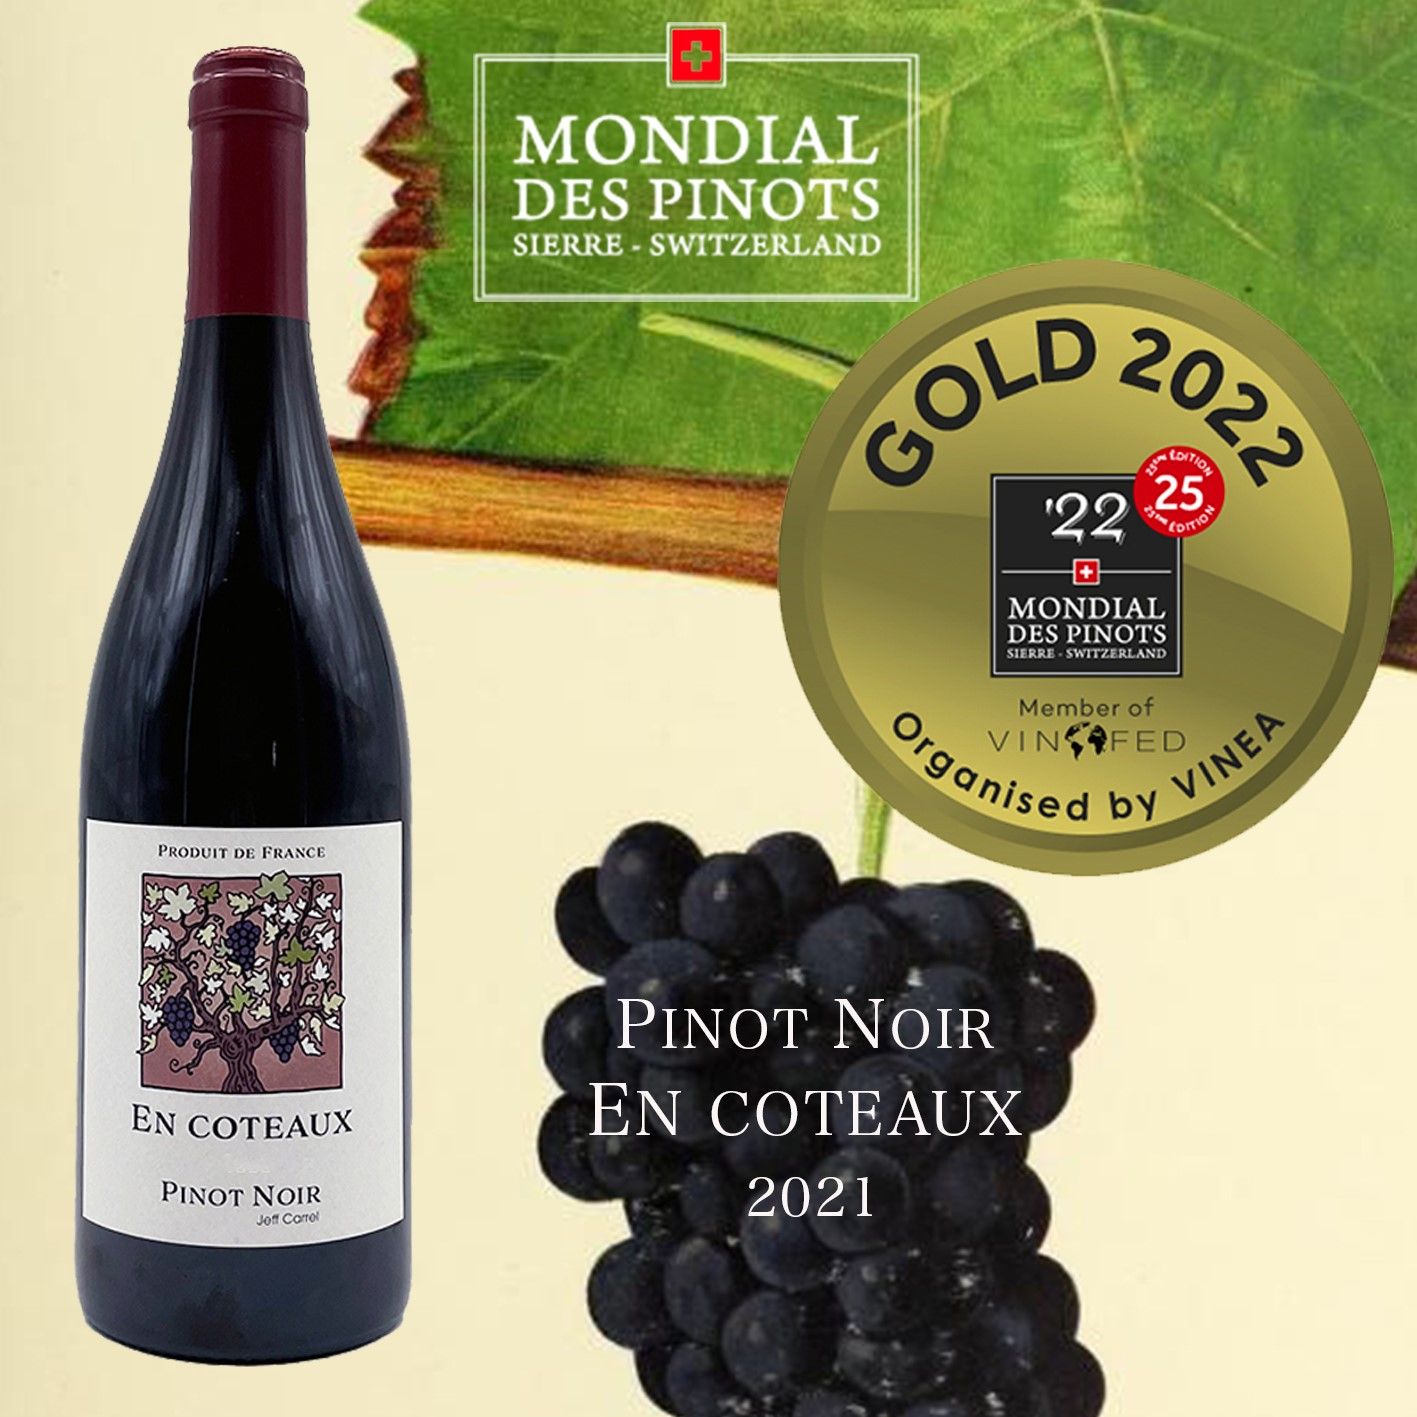 Mondial des Pinots Pinot Noir Jeff Carrel médaille d'or 2021